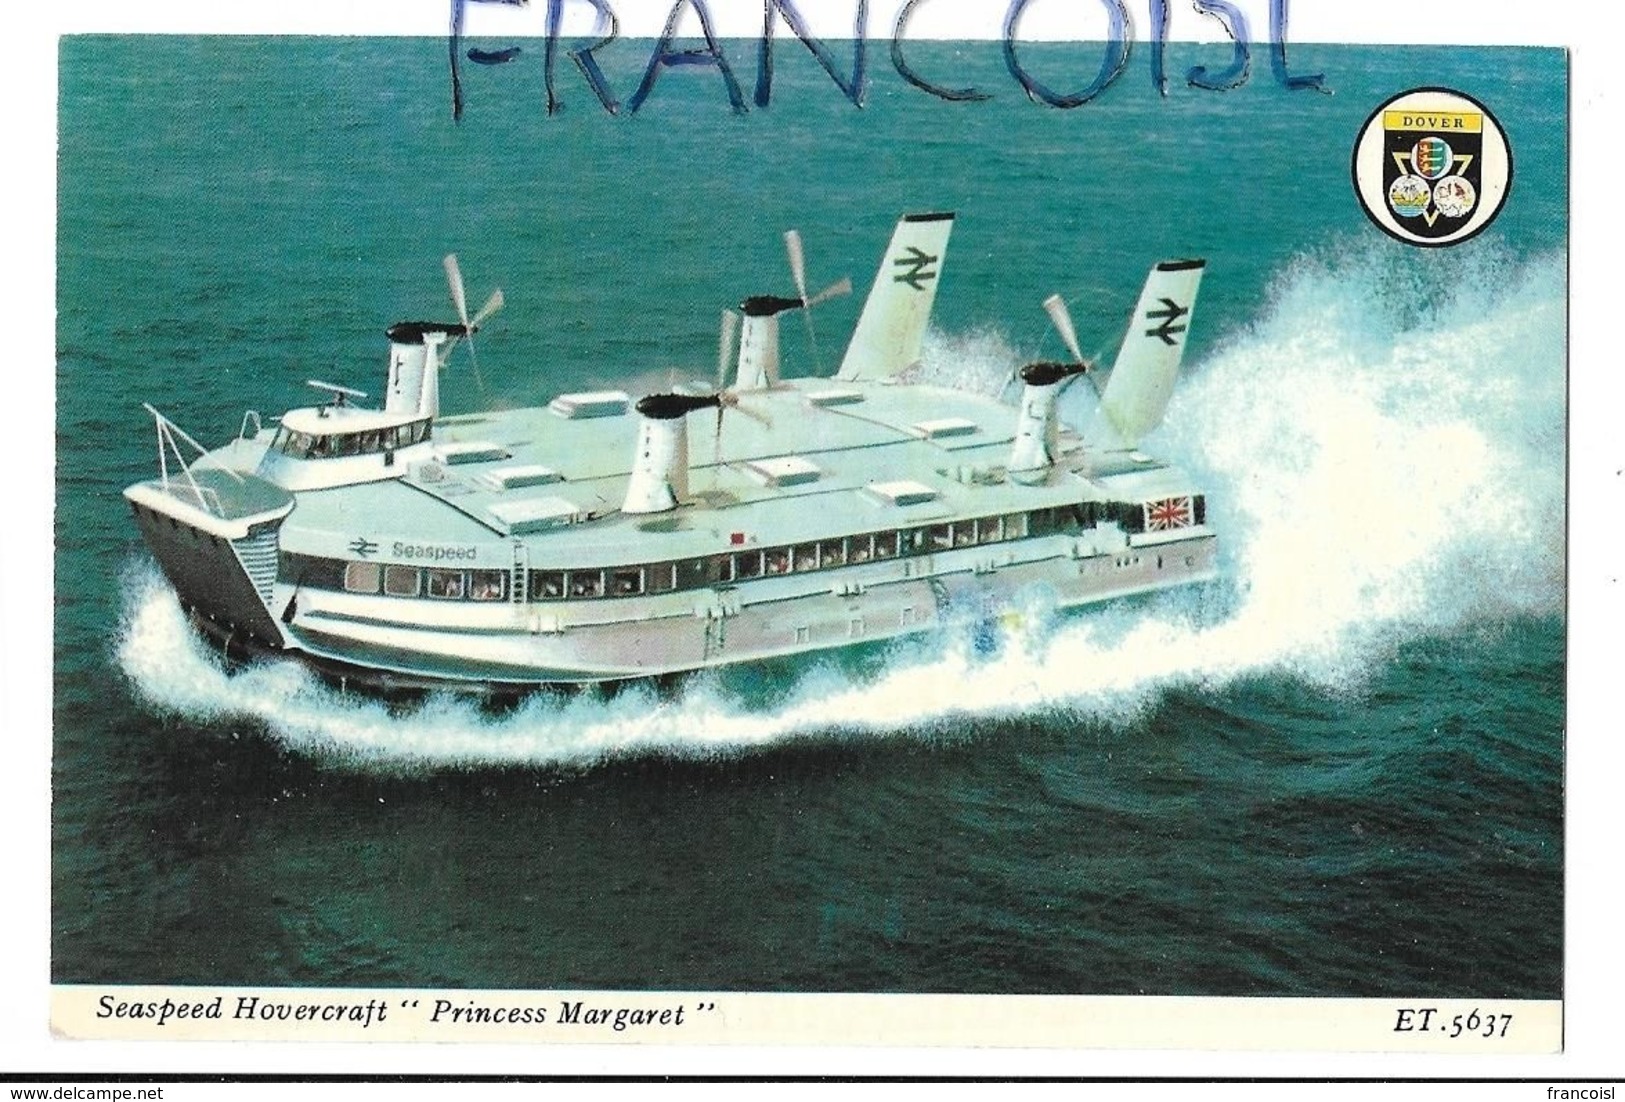 Seaspeed Hovercraft" Princess Margaret" - Hovercrafts